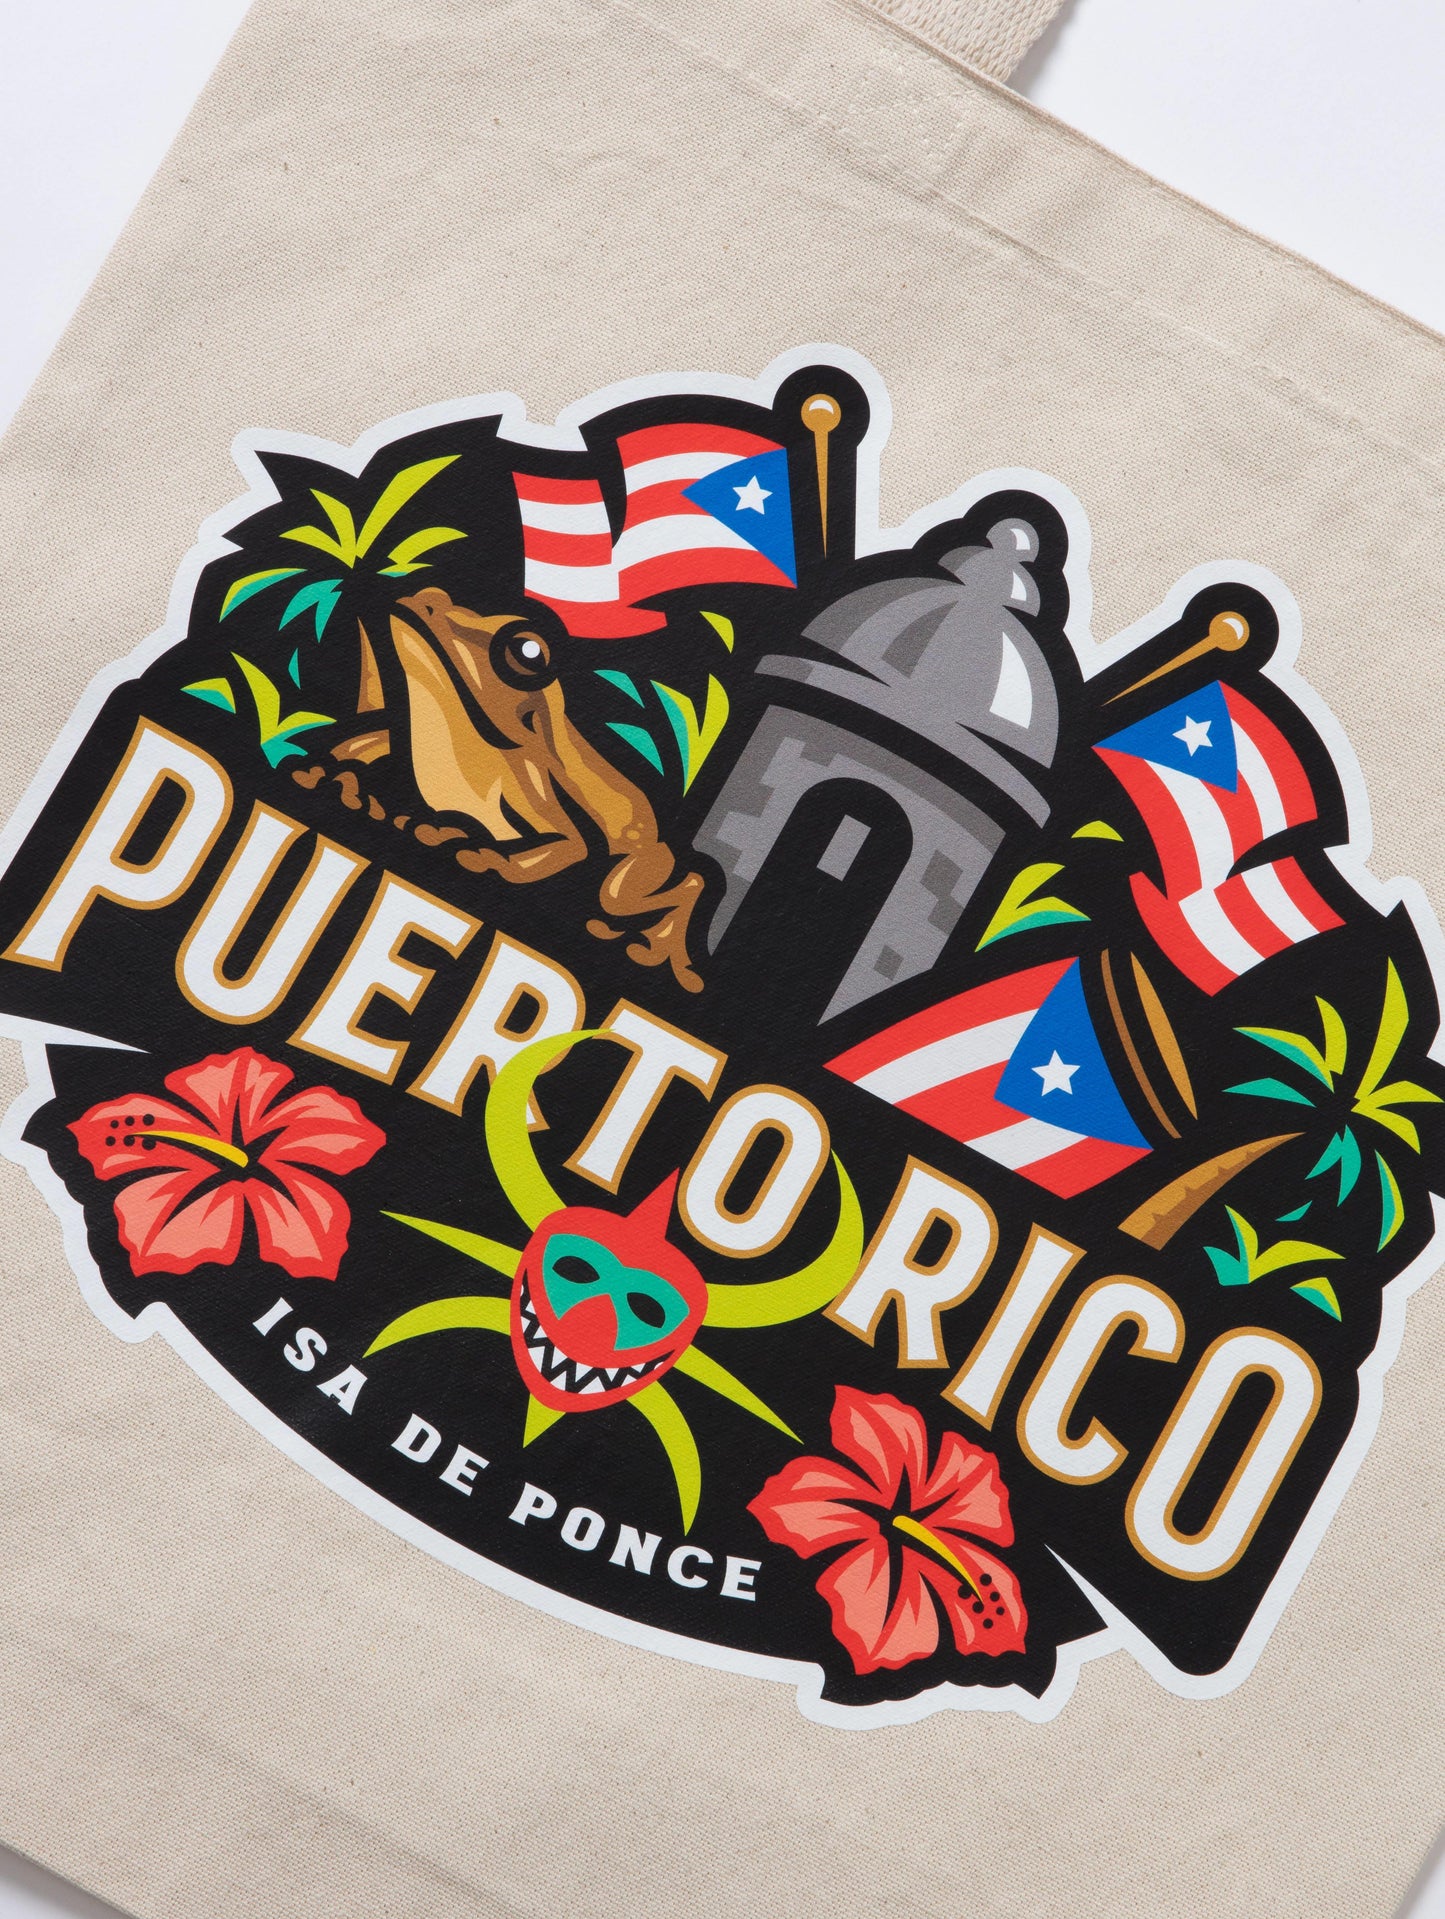 Viva Puerto Rico Tote bag